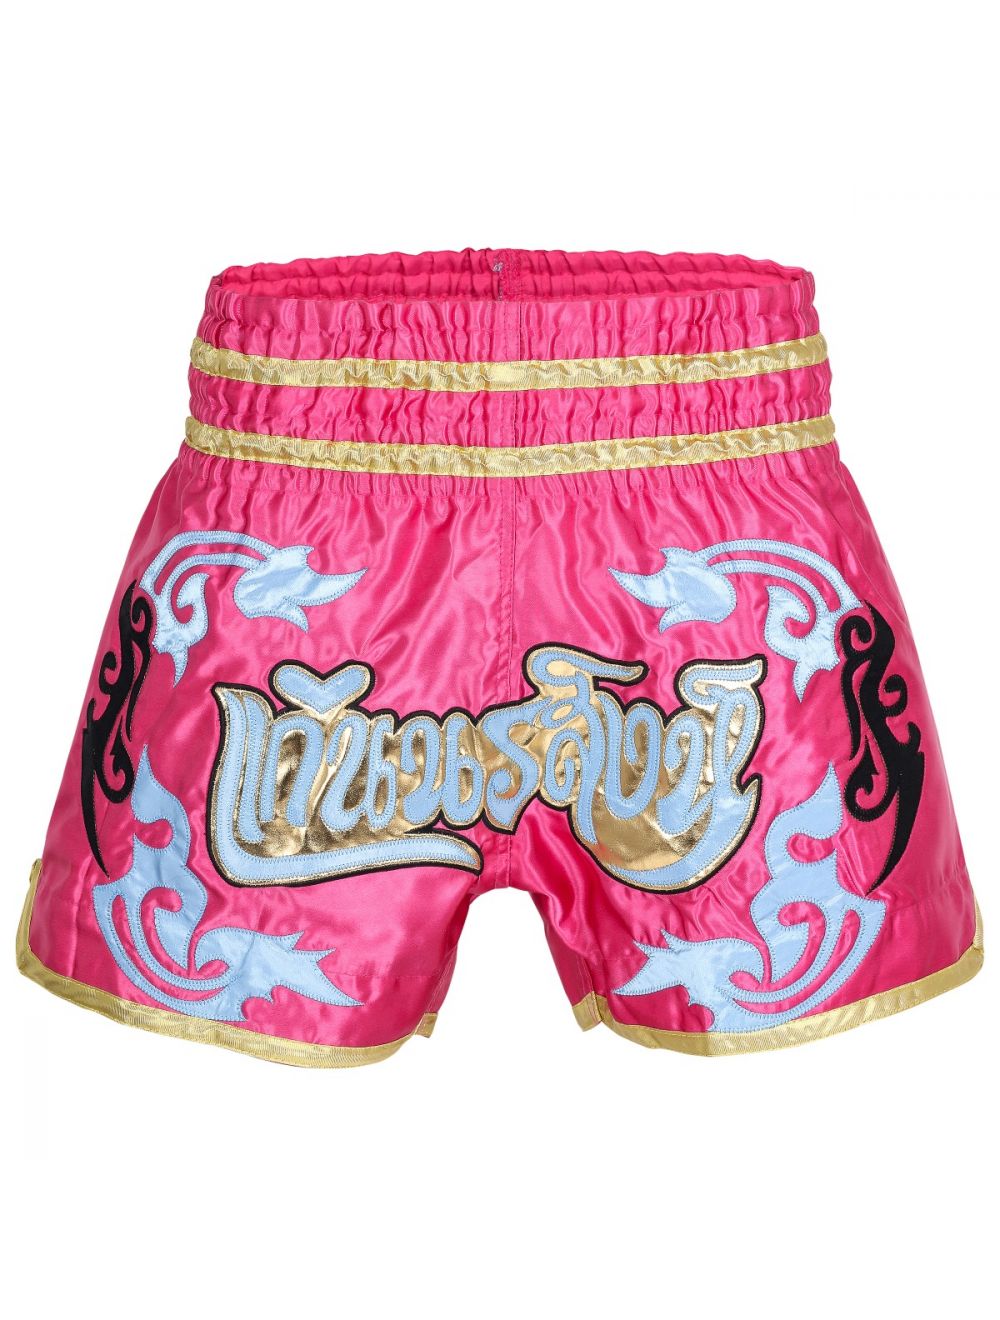 MMA Pink Ninja Fight Training Boxing Trunk Shorts Muay Thai Jiu-Jitsu Pants 